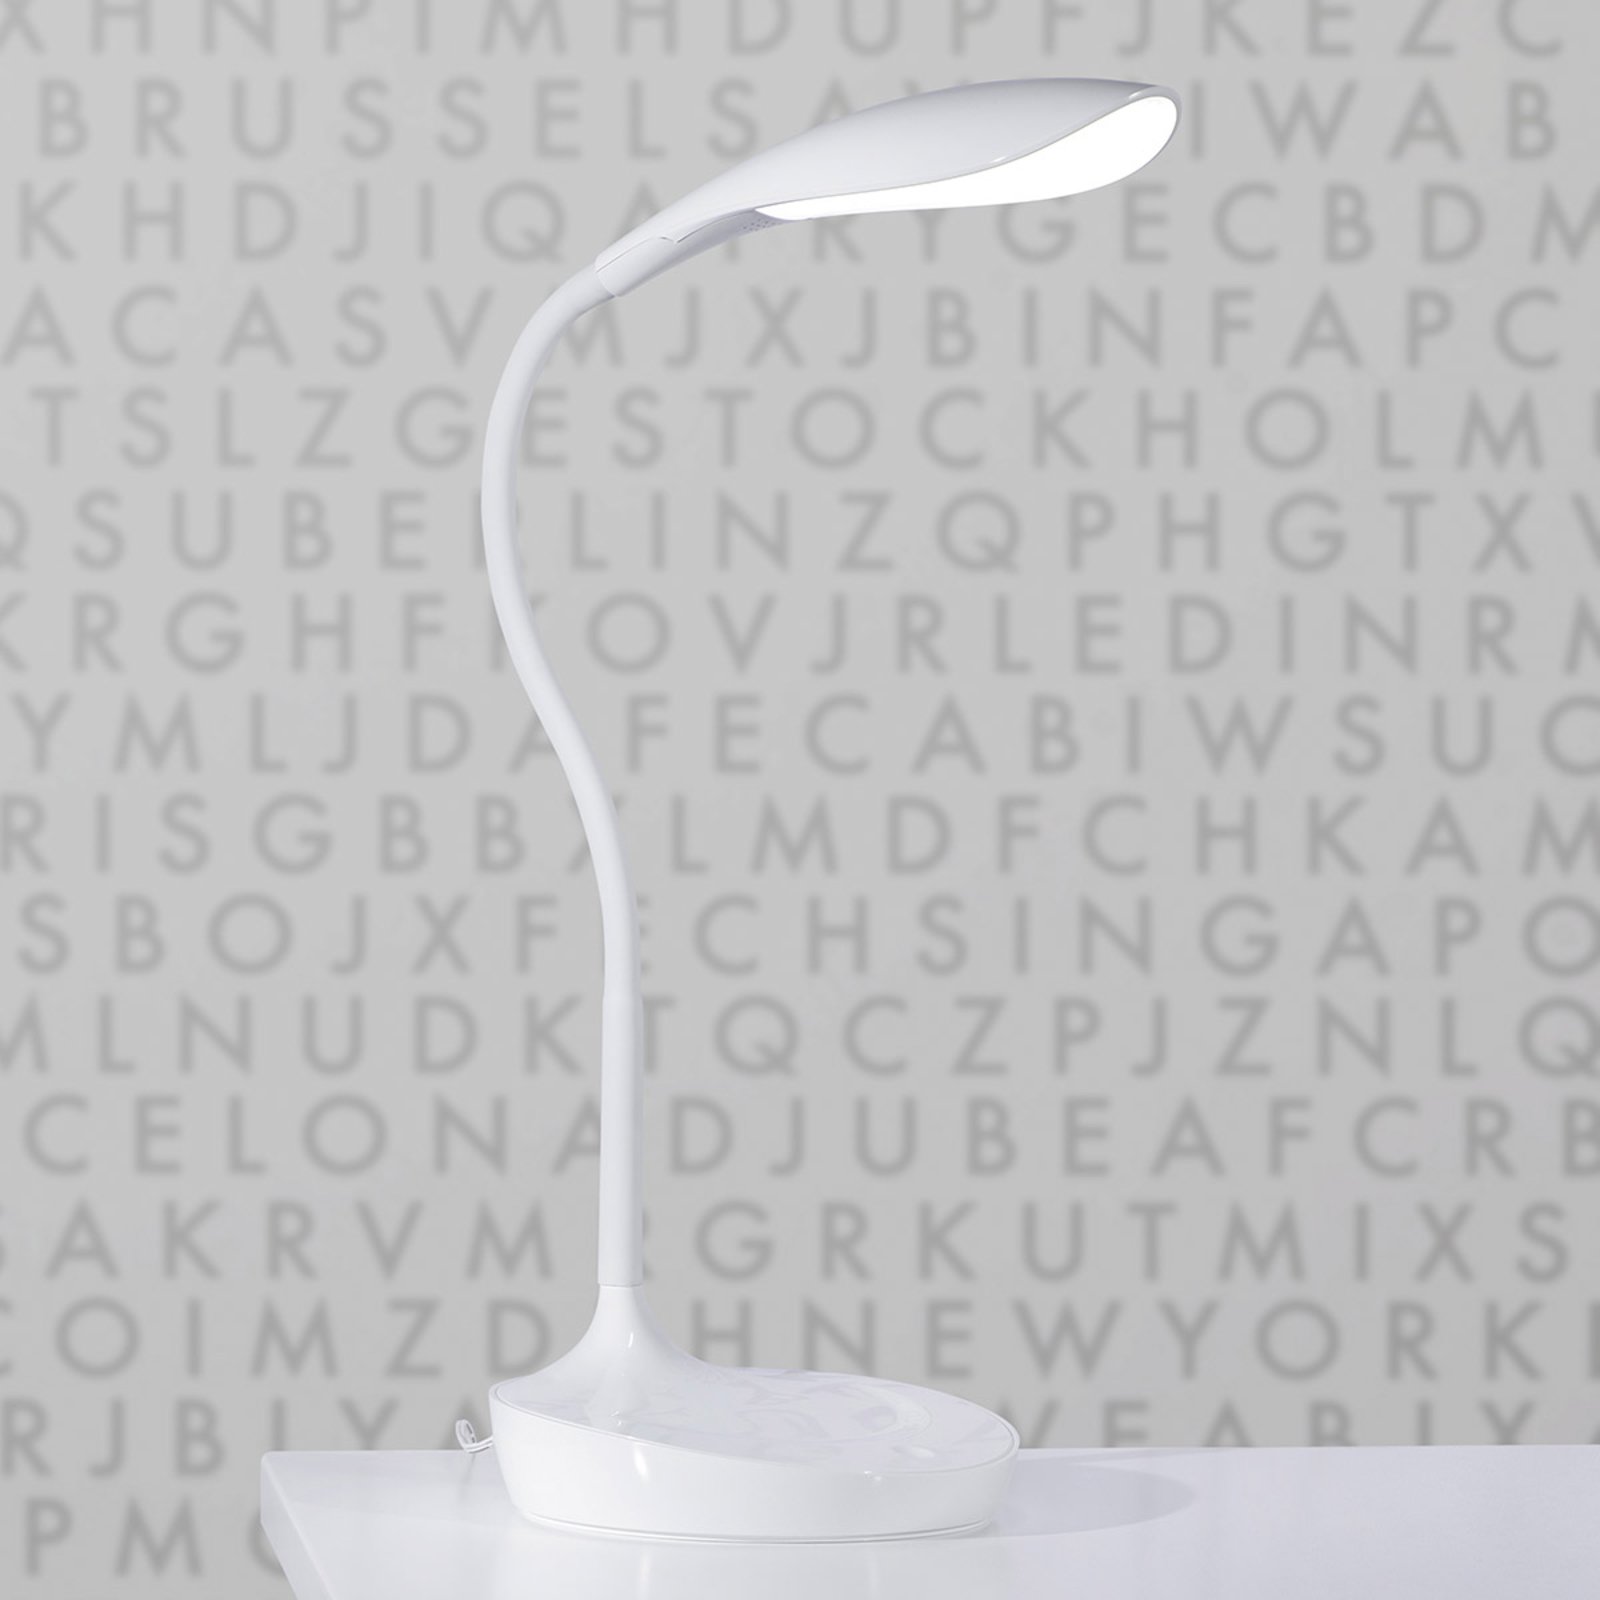 Lampe à poser LED Swan, blanc